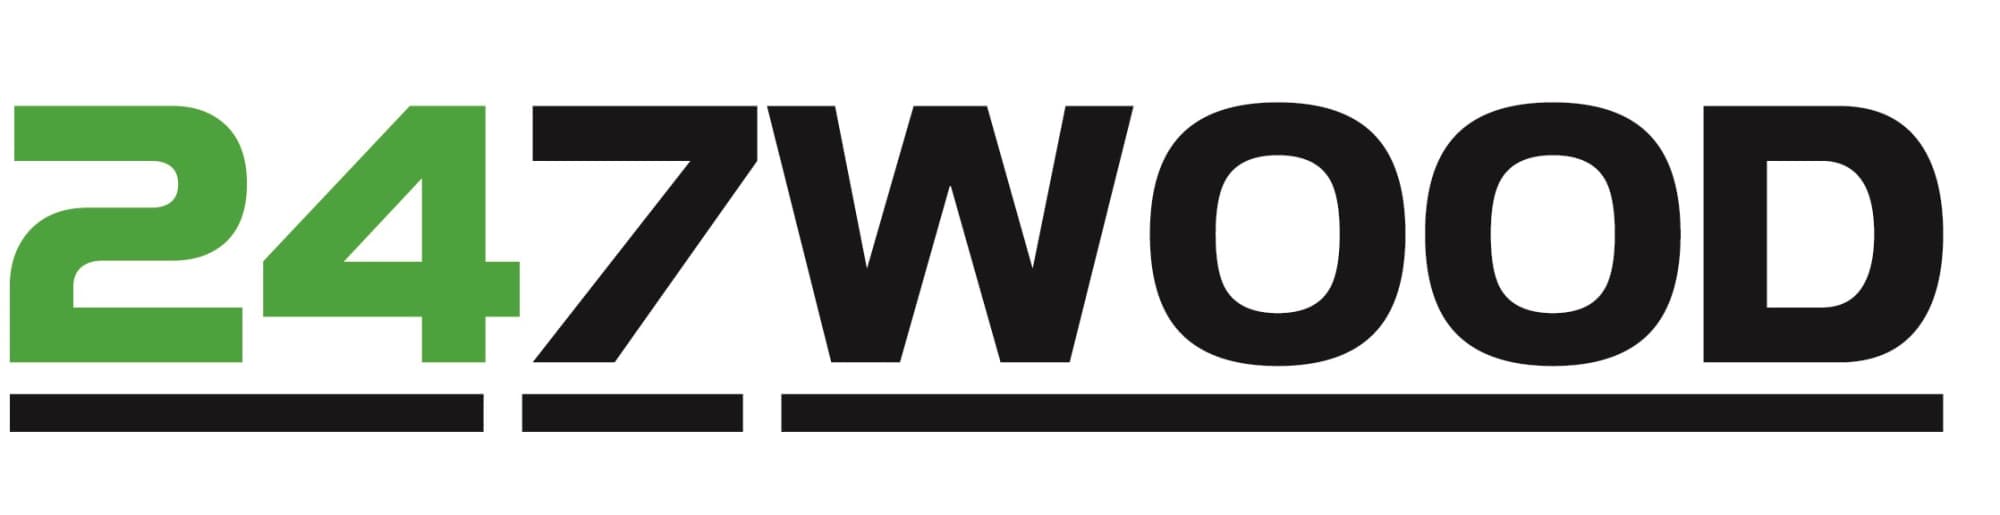 247WOOD logo